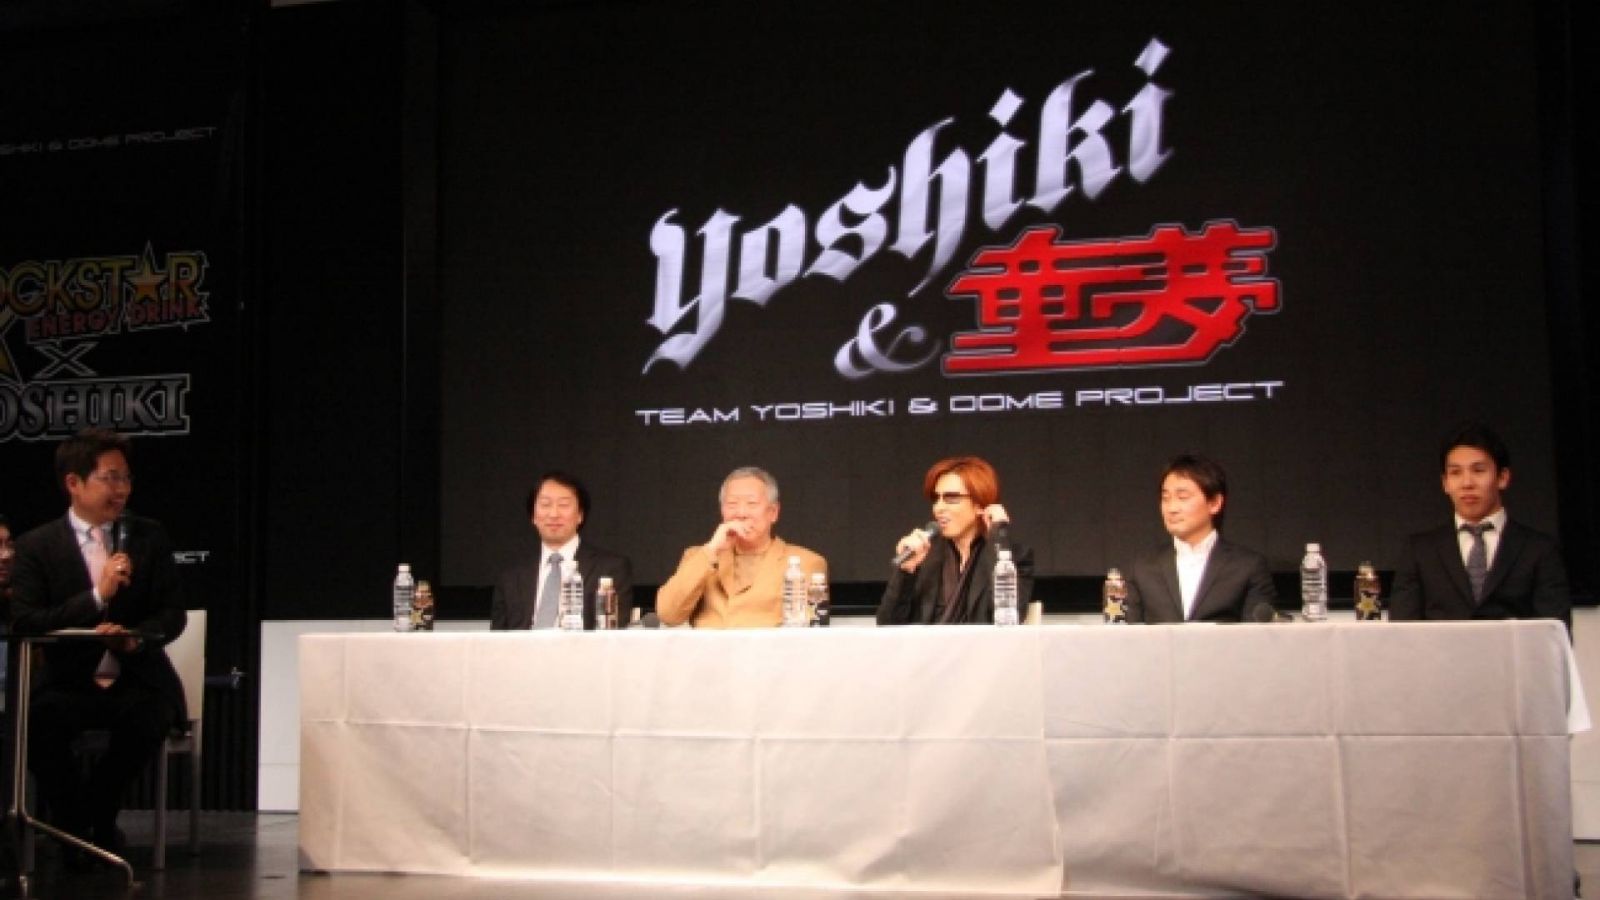 Pressekonferenz mit Yoshiki © YOSHIKI - JaME - Polina Kogan